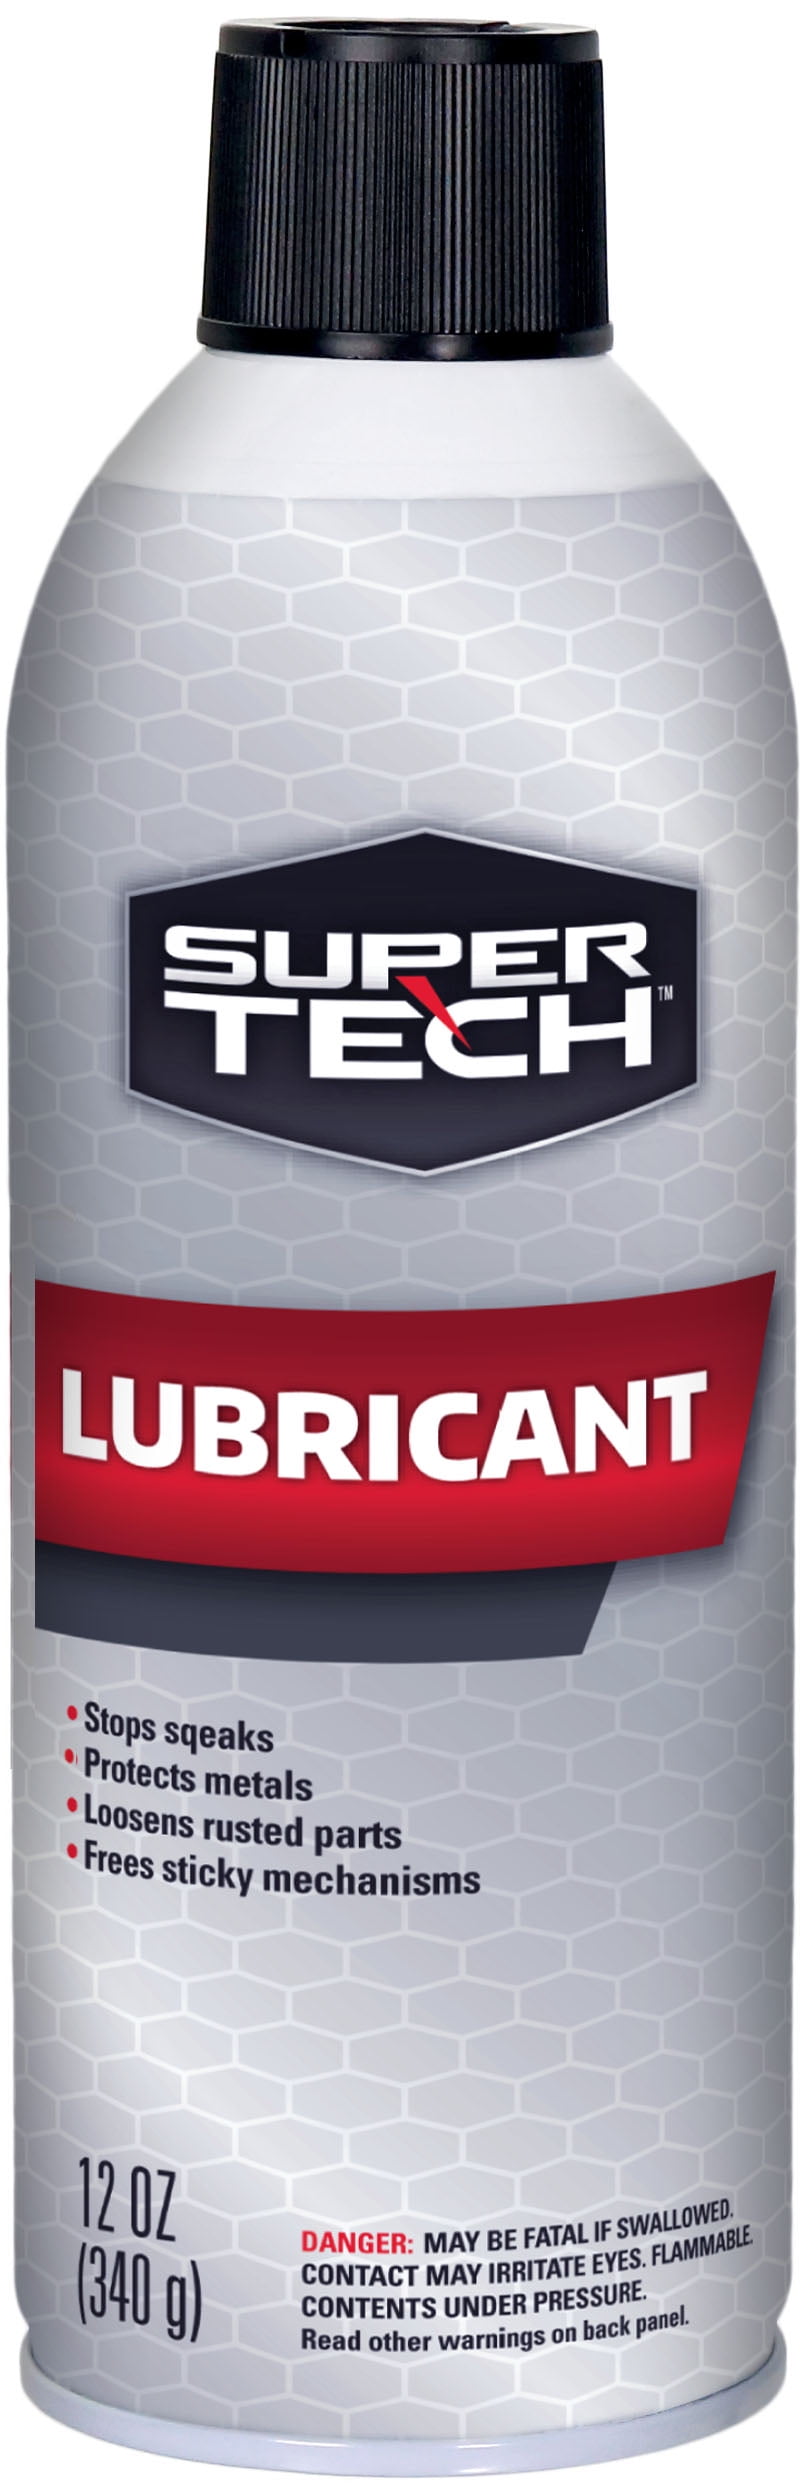 Super Tech Penetrating Lubricant